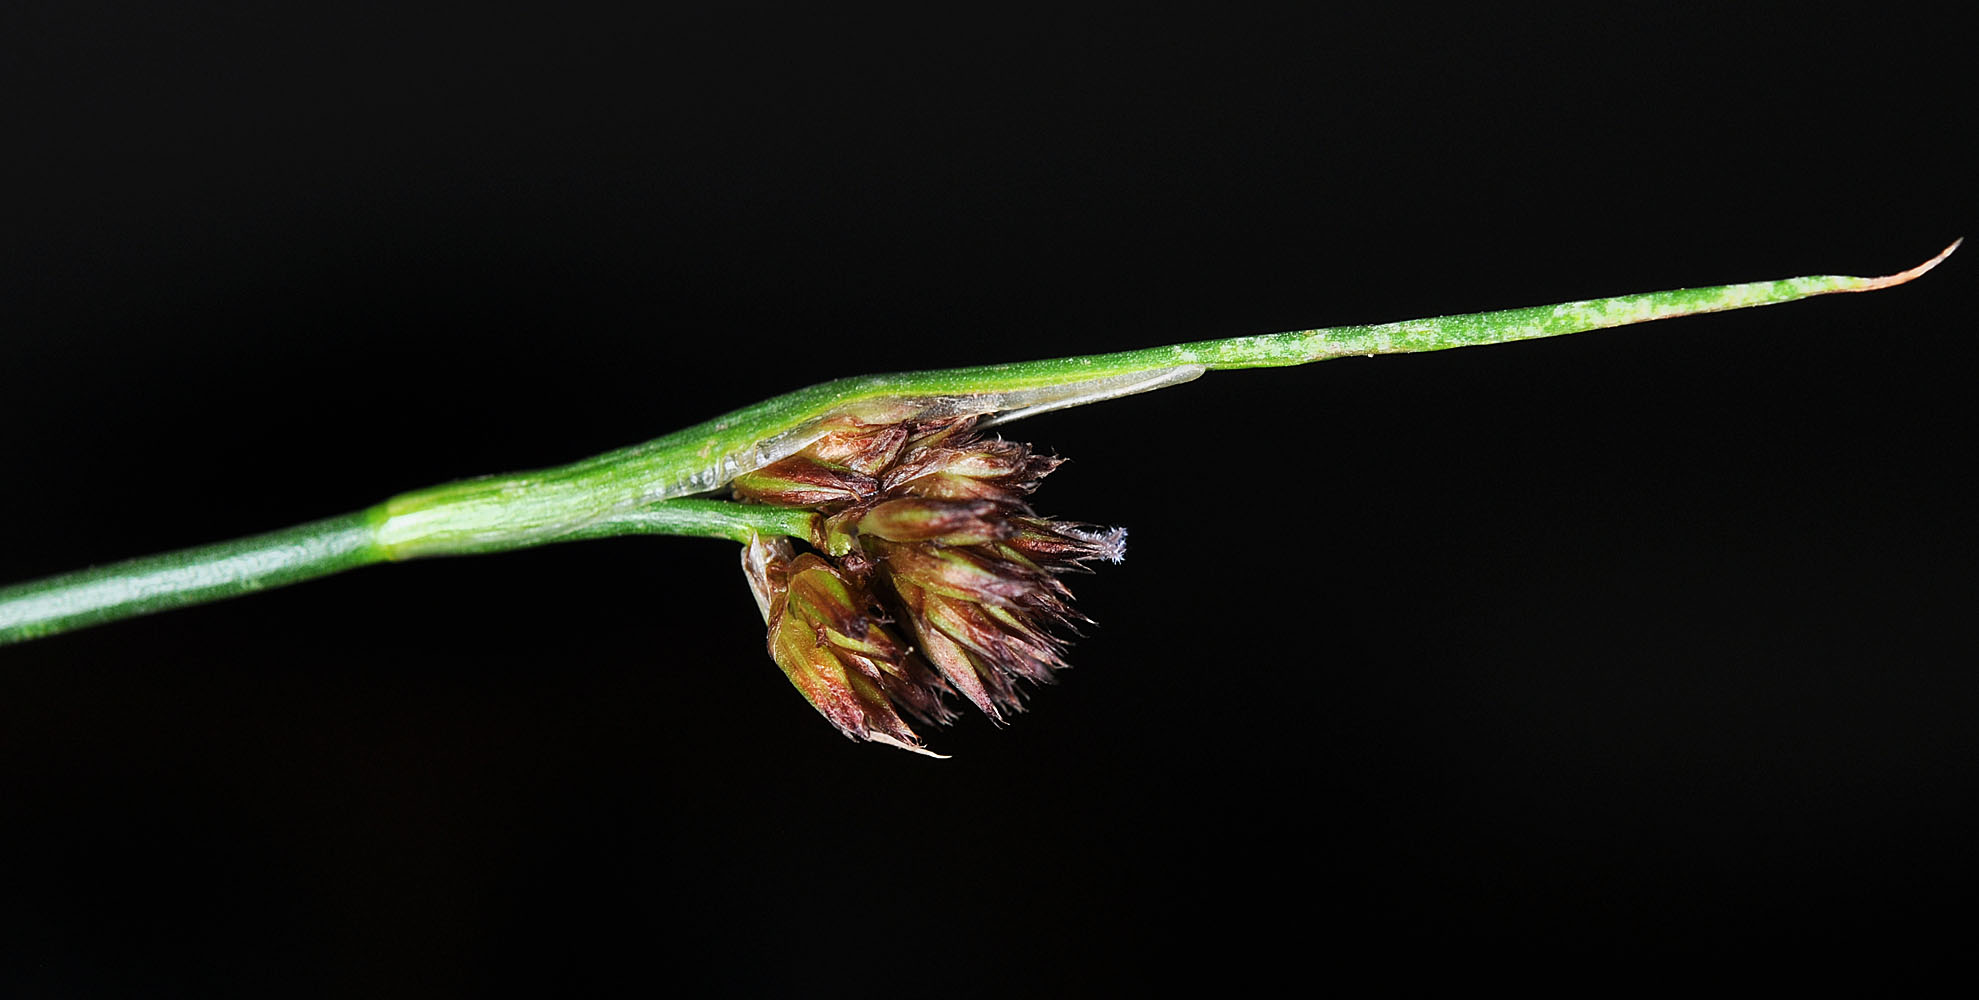 Flora of Eastern Washington Image: Juncus mertensianus